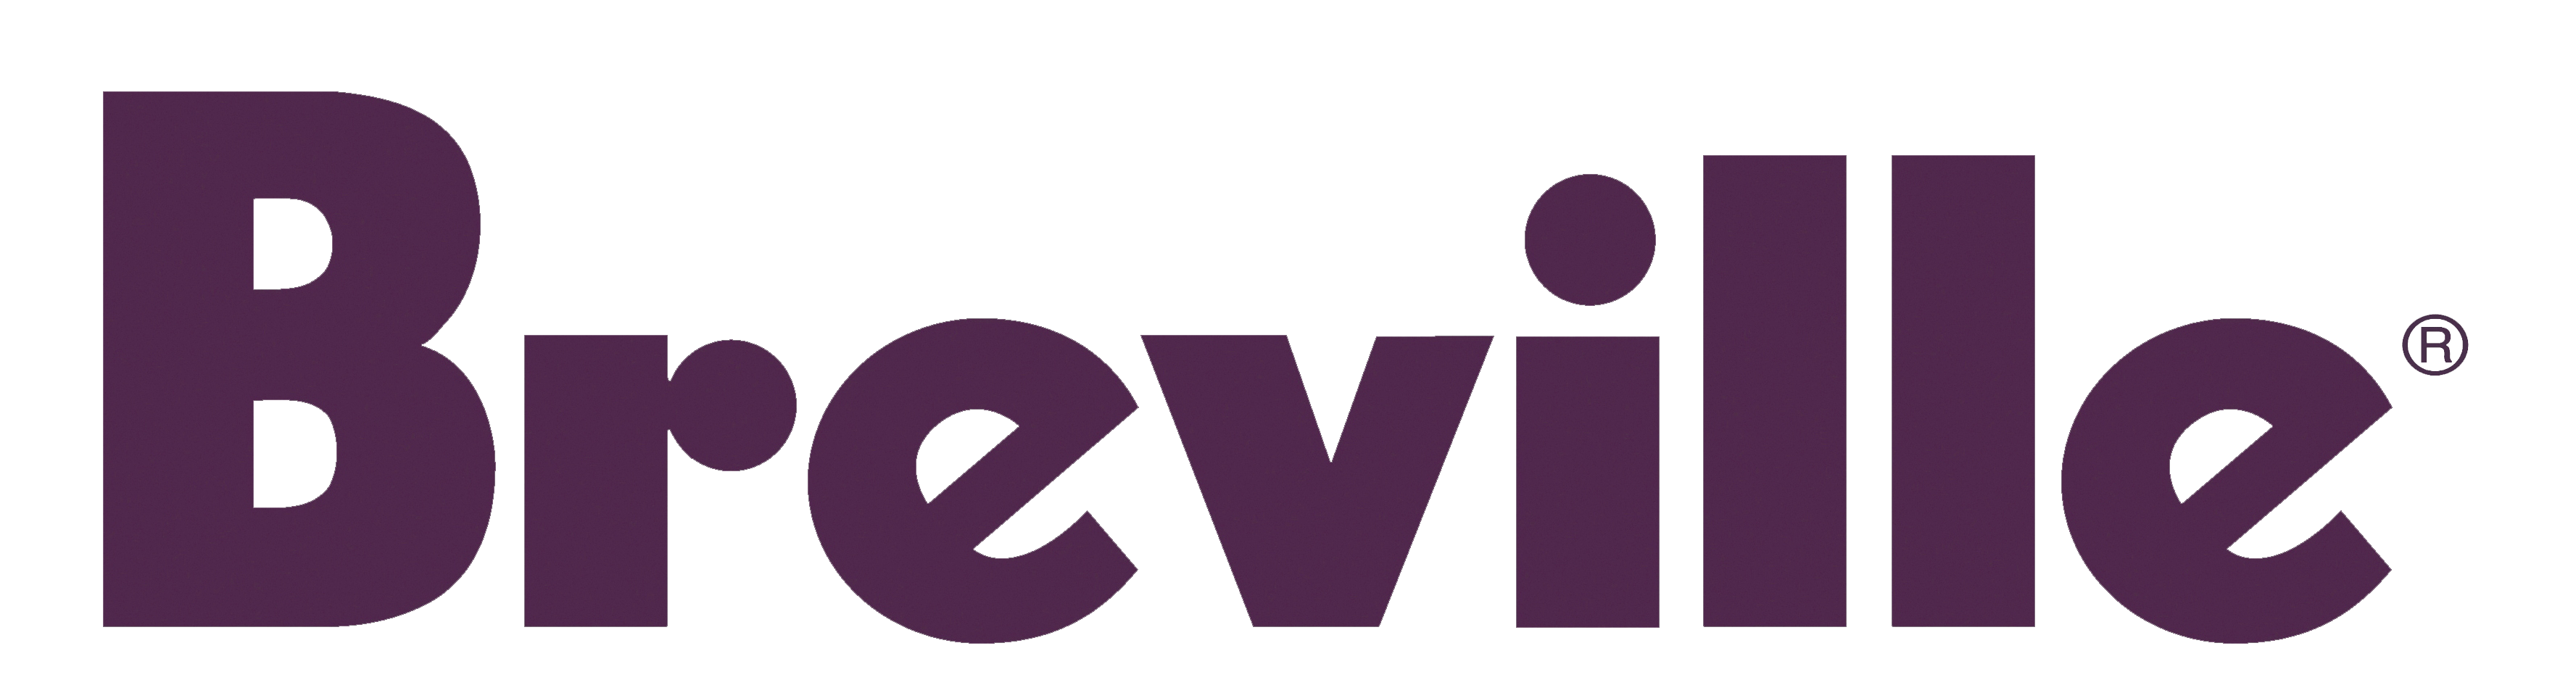 Breville_logo